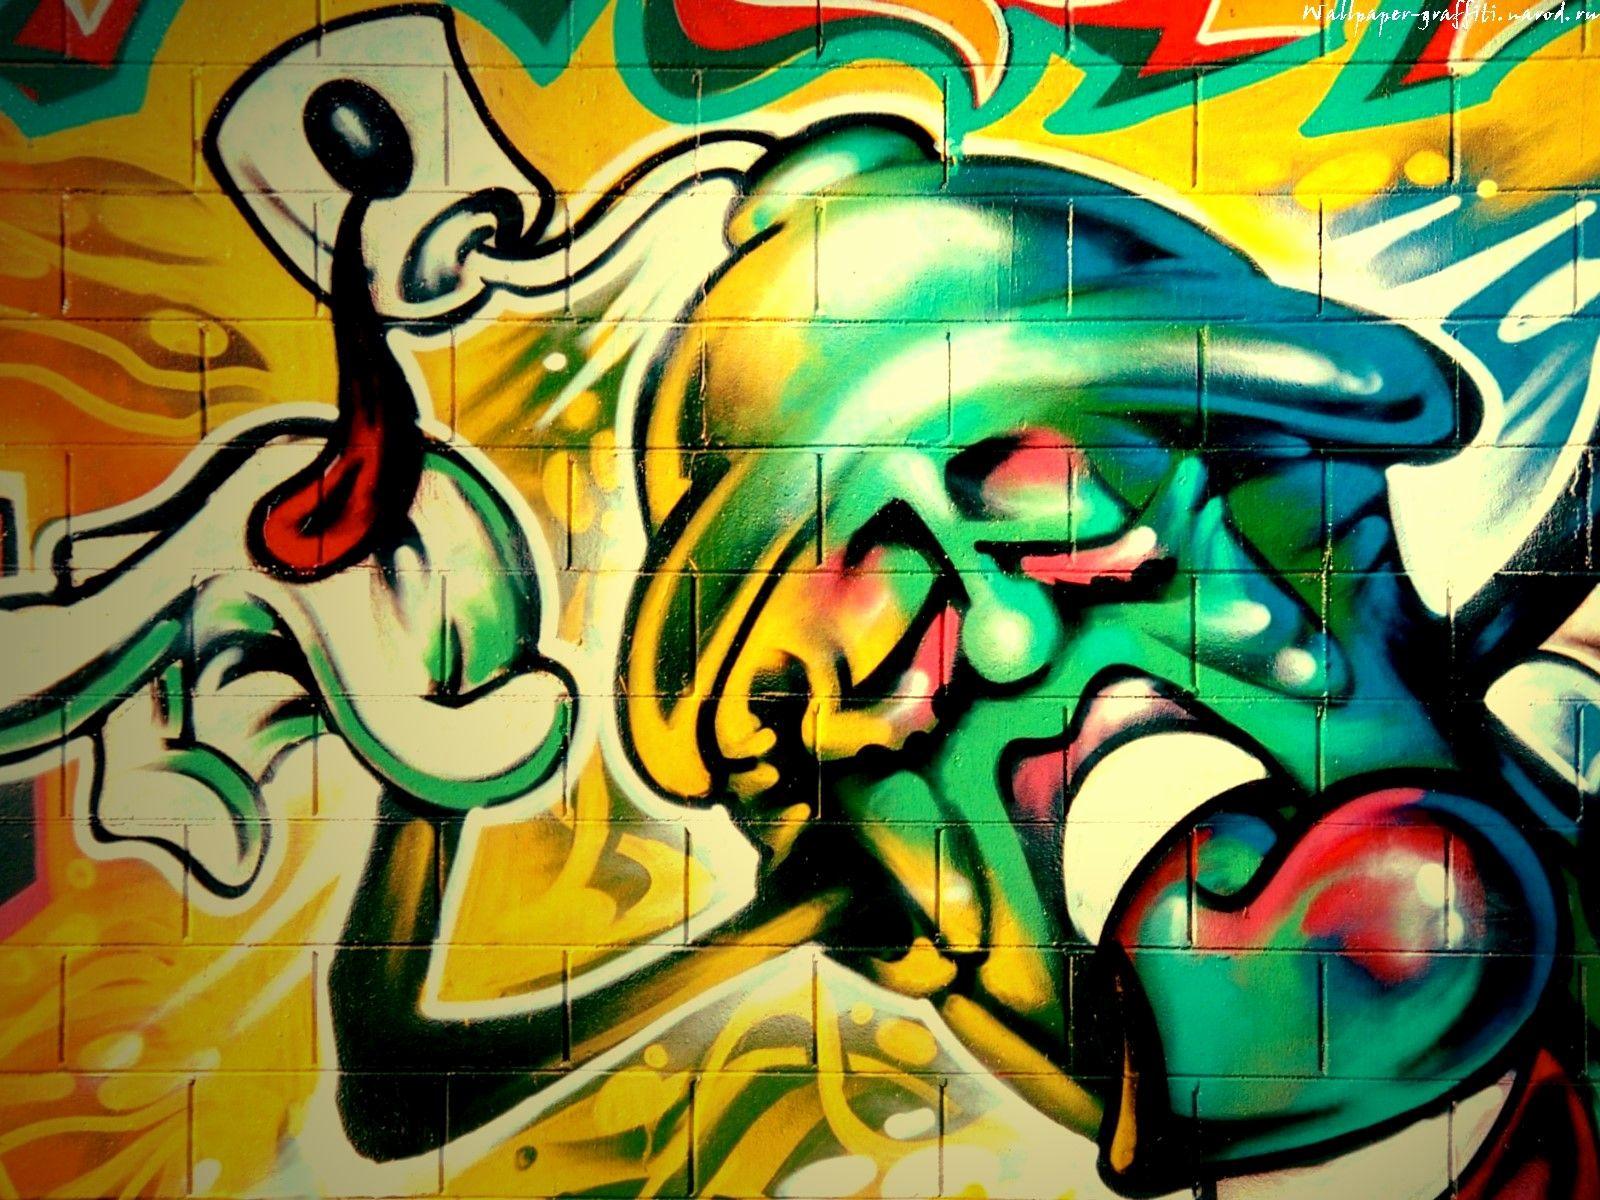 Wallpaper Of Graffiti Best Of Download Free Graffiti Wallpaper